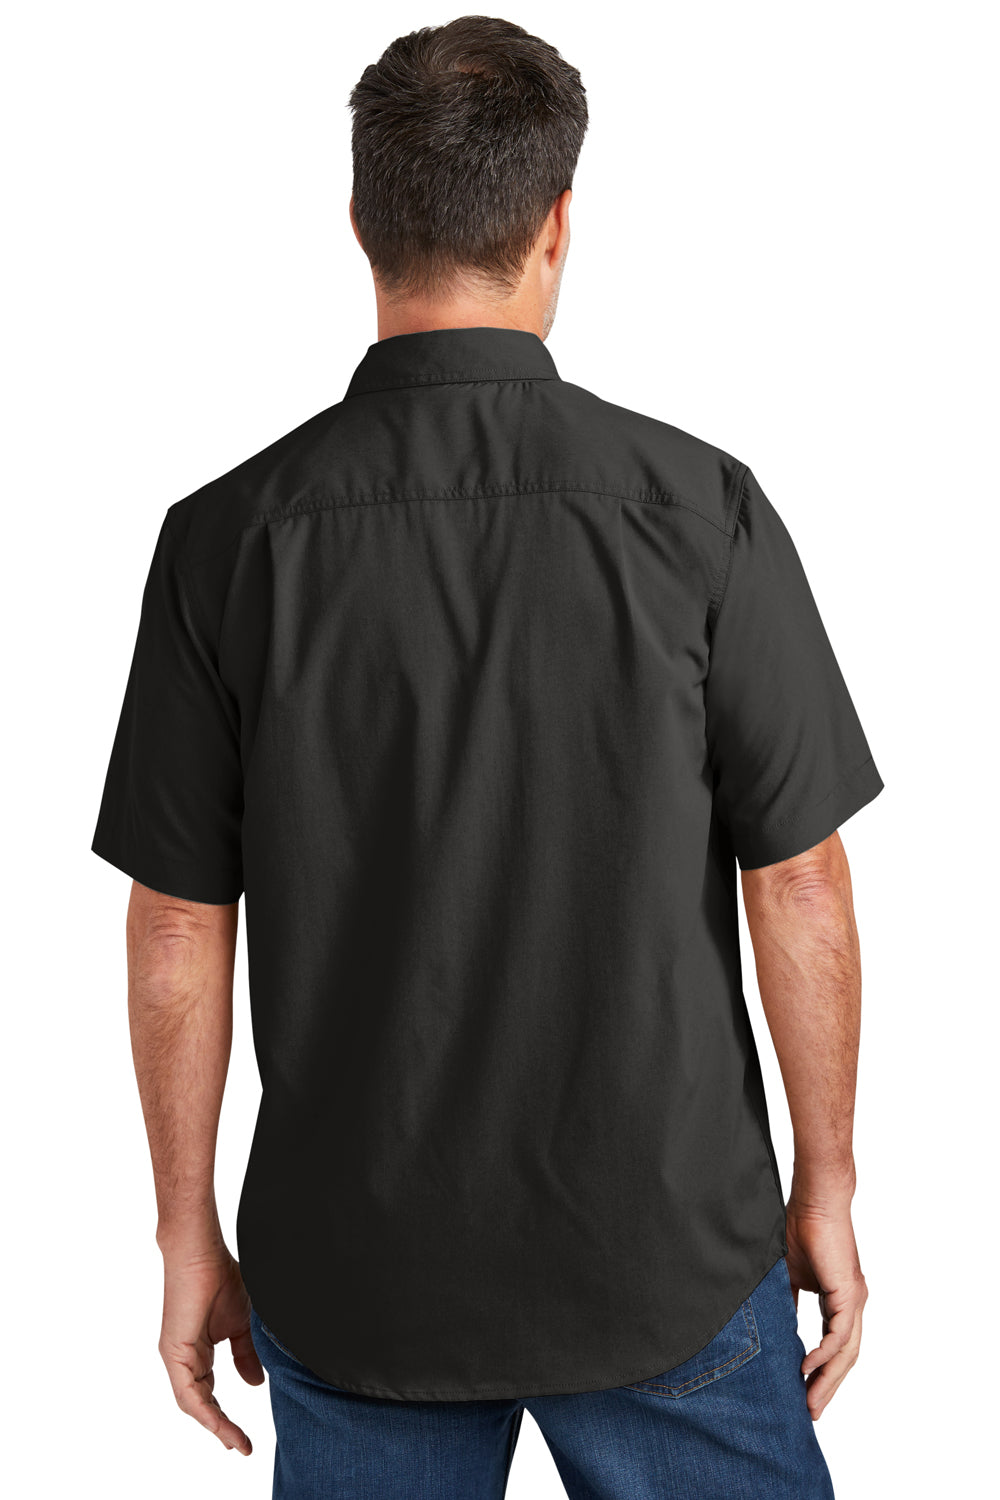 Carhartt CT105292 Mens Force Moisture Wicking Short Sleeve Button Down Shirt w/ Double Pockets Black Model Back